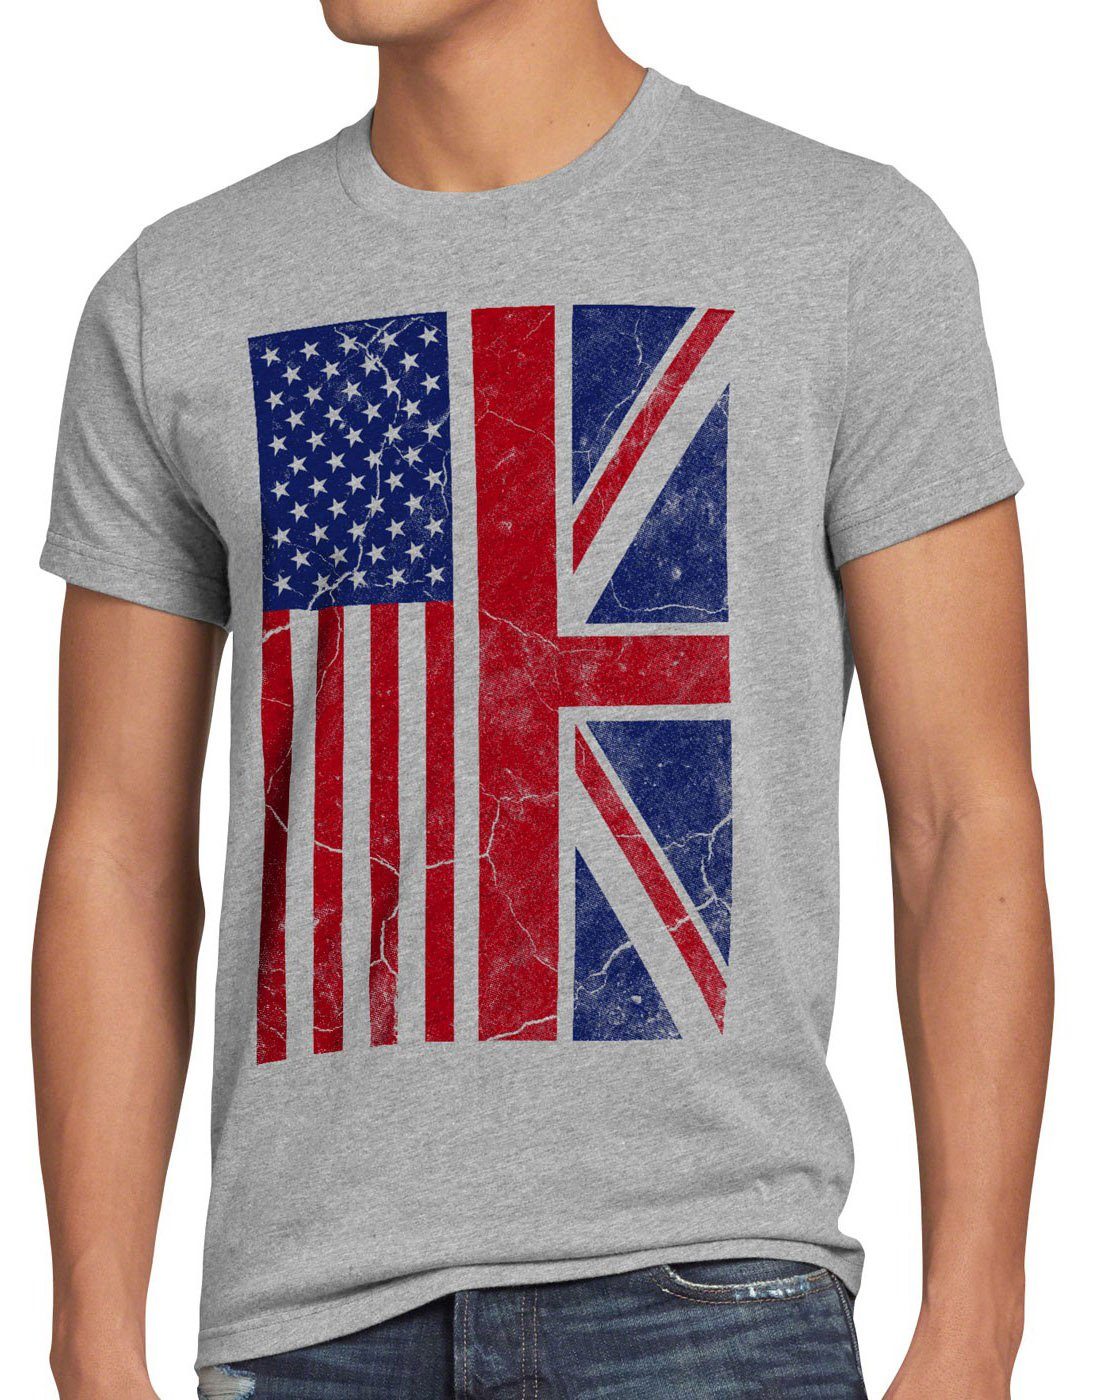 style3 Print-Shirt Herren T-Shirt USA Amerika Union Jack Flagge Flag Stars Stripes brexit England grau meliert | T-Shirts